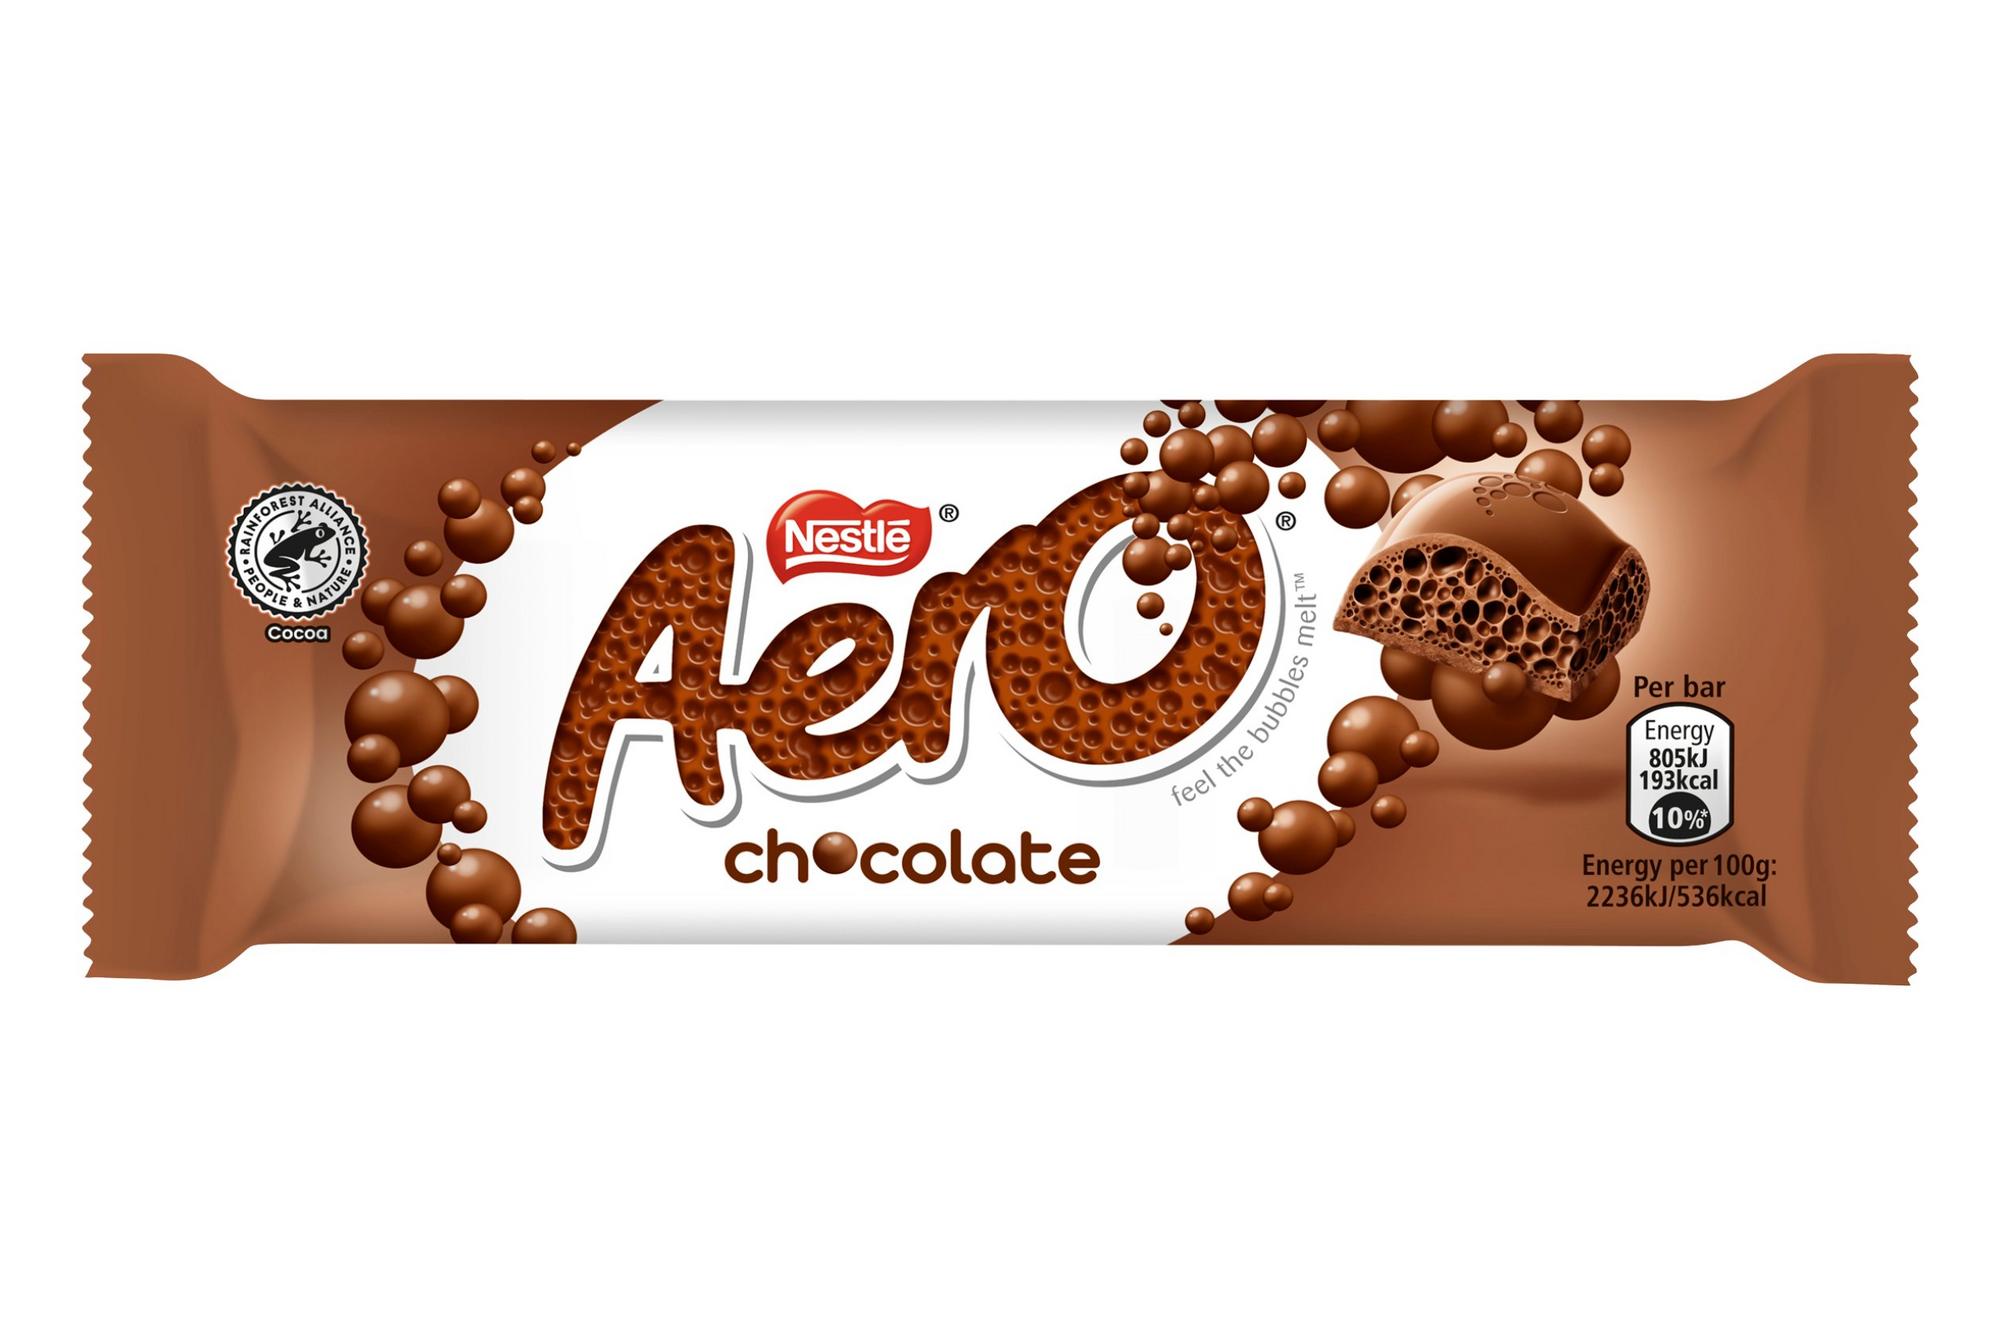 Aero Milk Chocolate